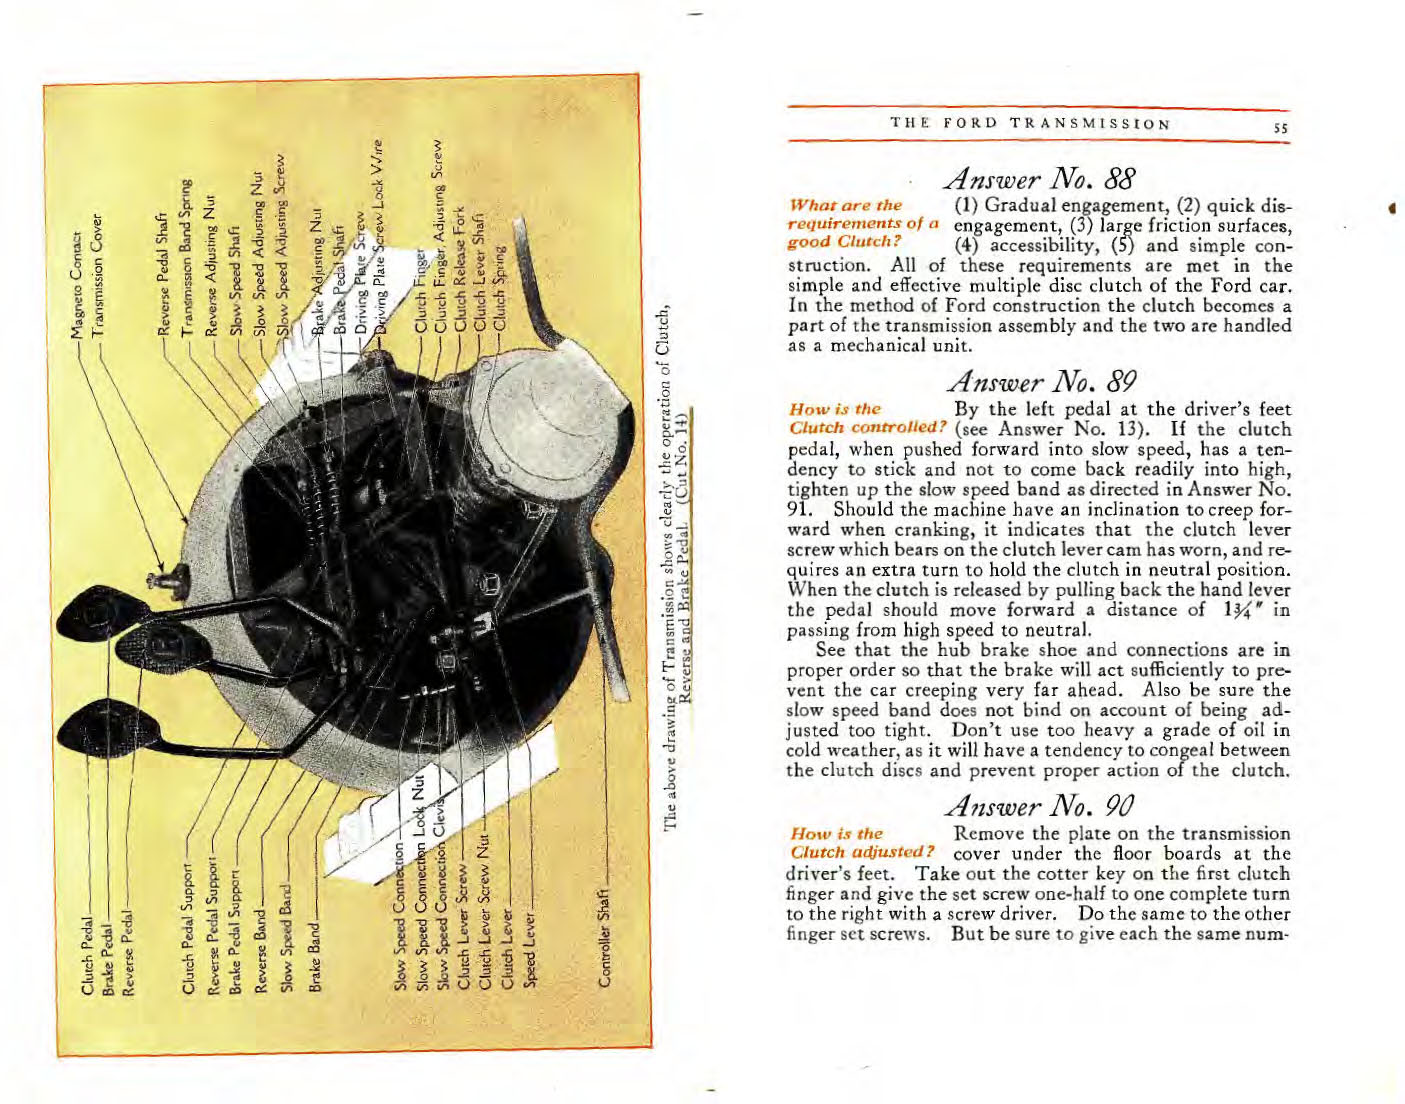 n_1915 Ford Owners Manual-54-55.jpg